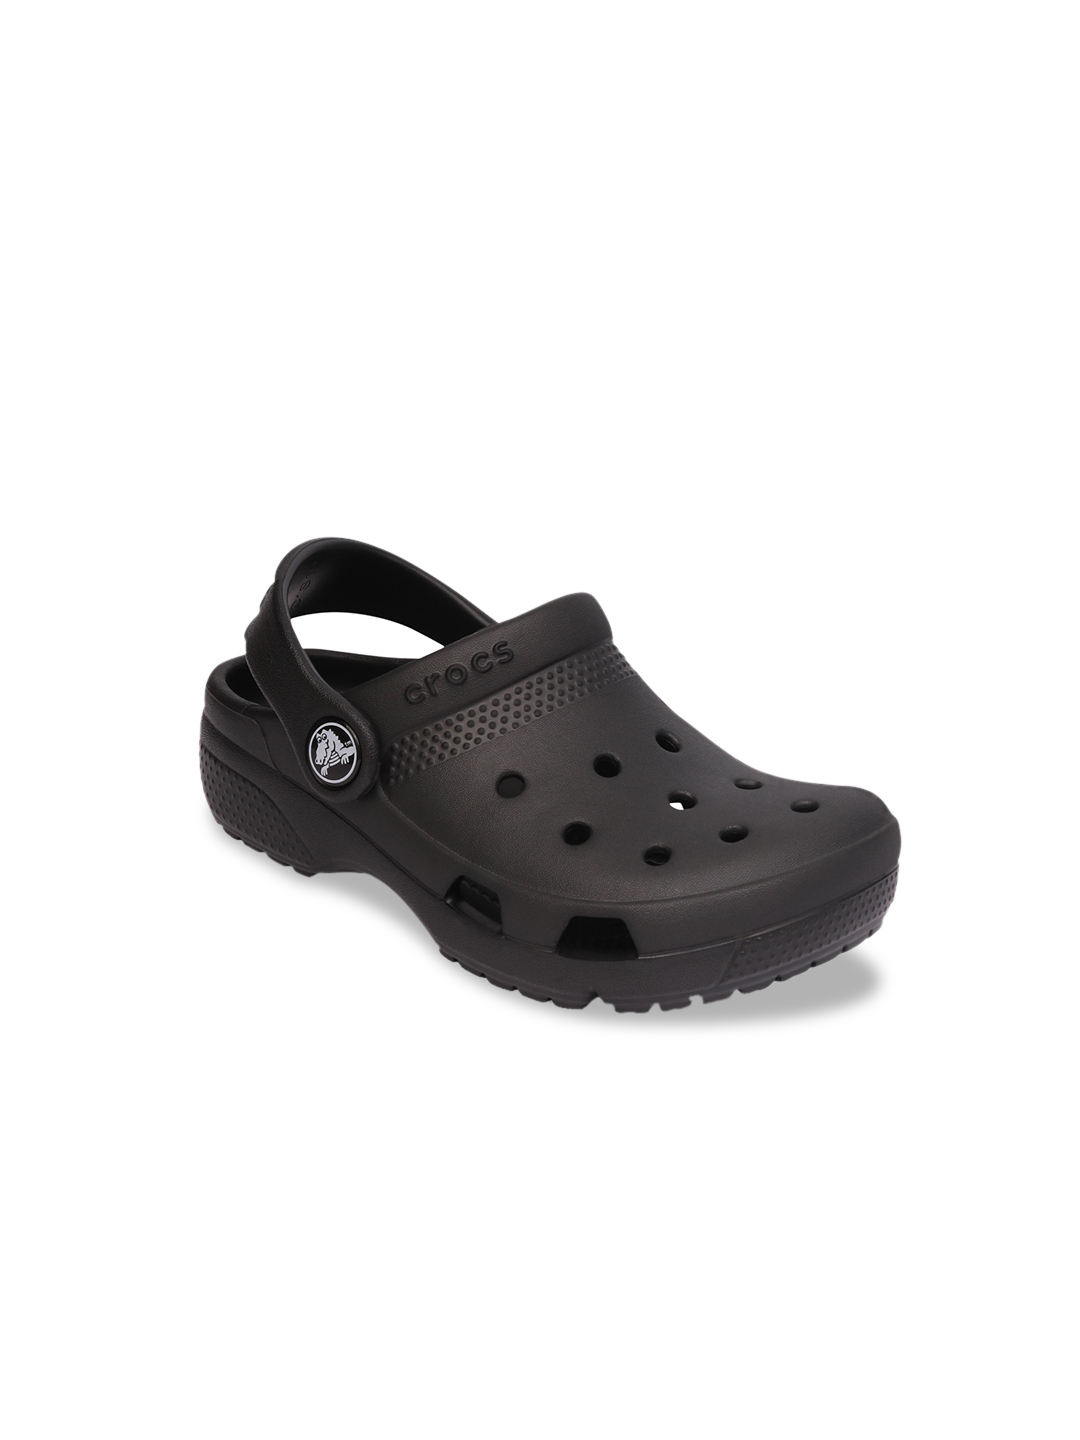 Buy Crocs Boys Black Solid Clogs - Flip Flops for Boys 8062867 | Myntra